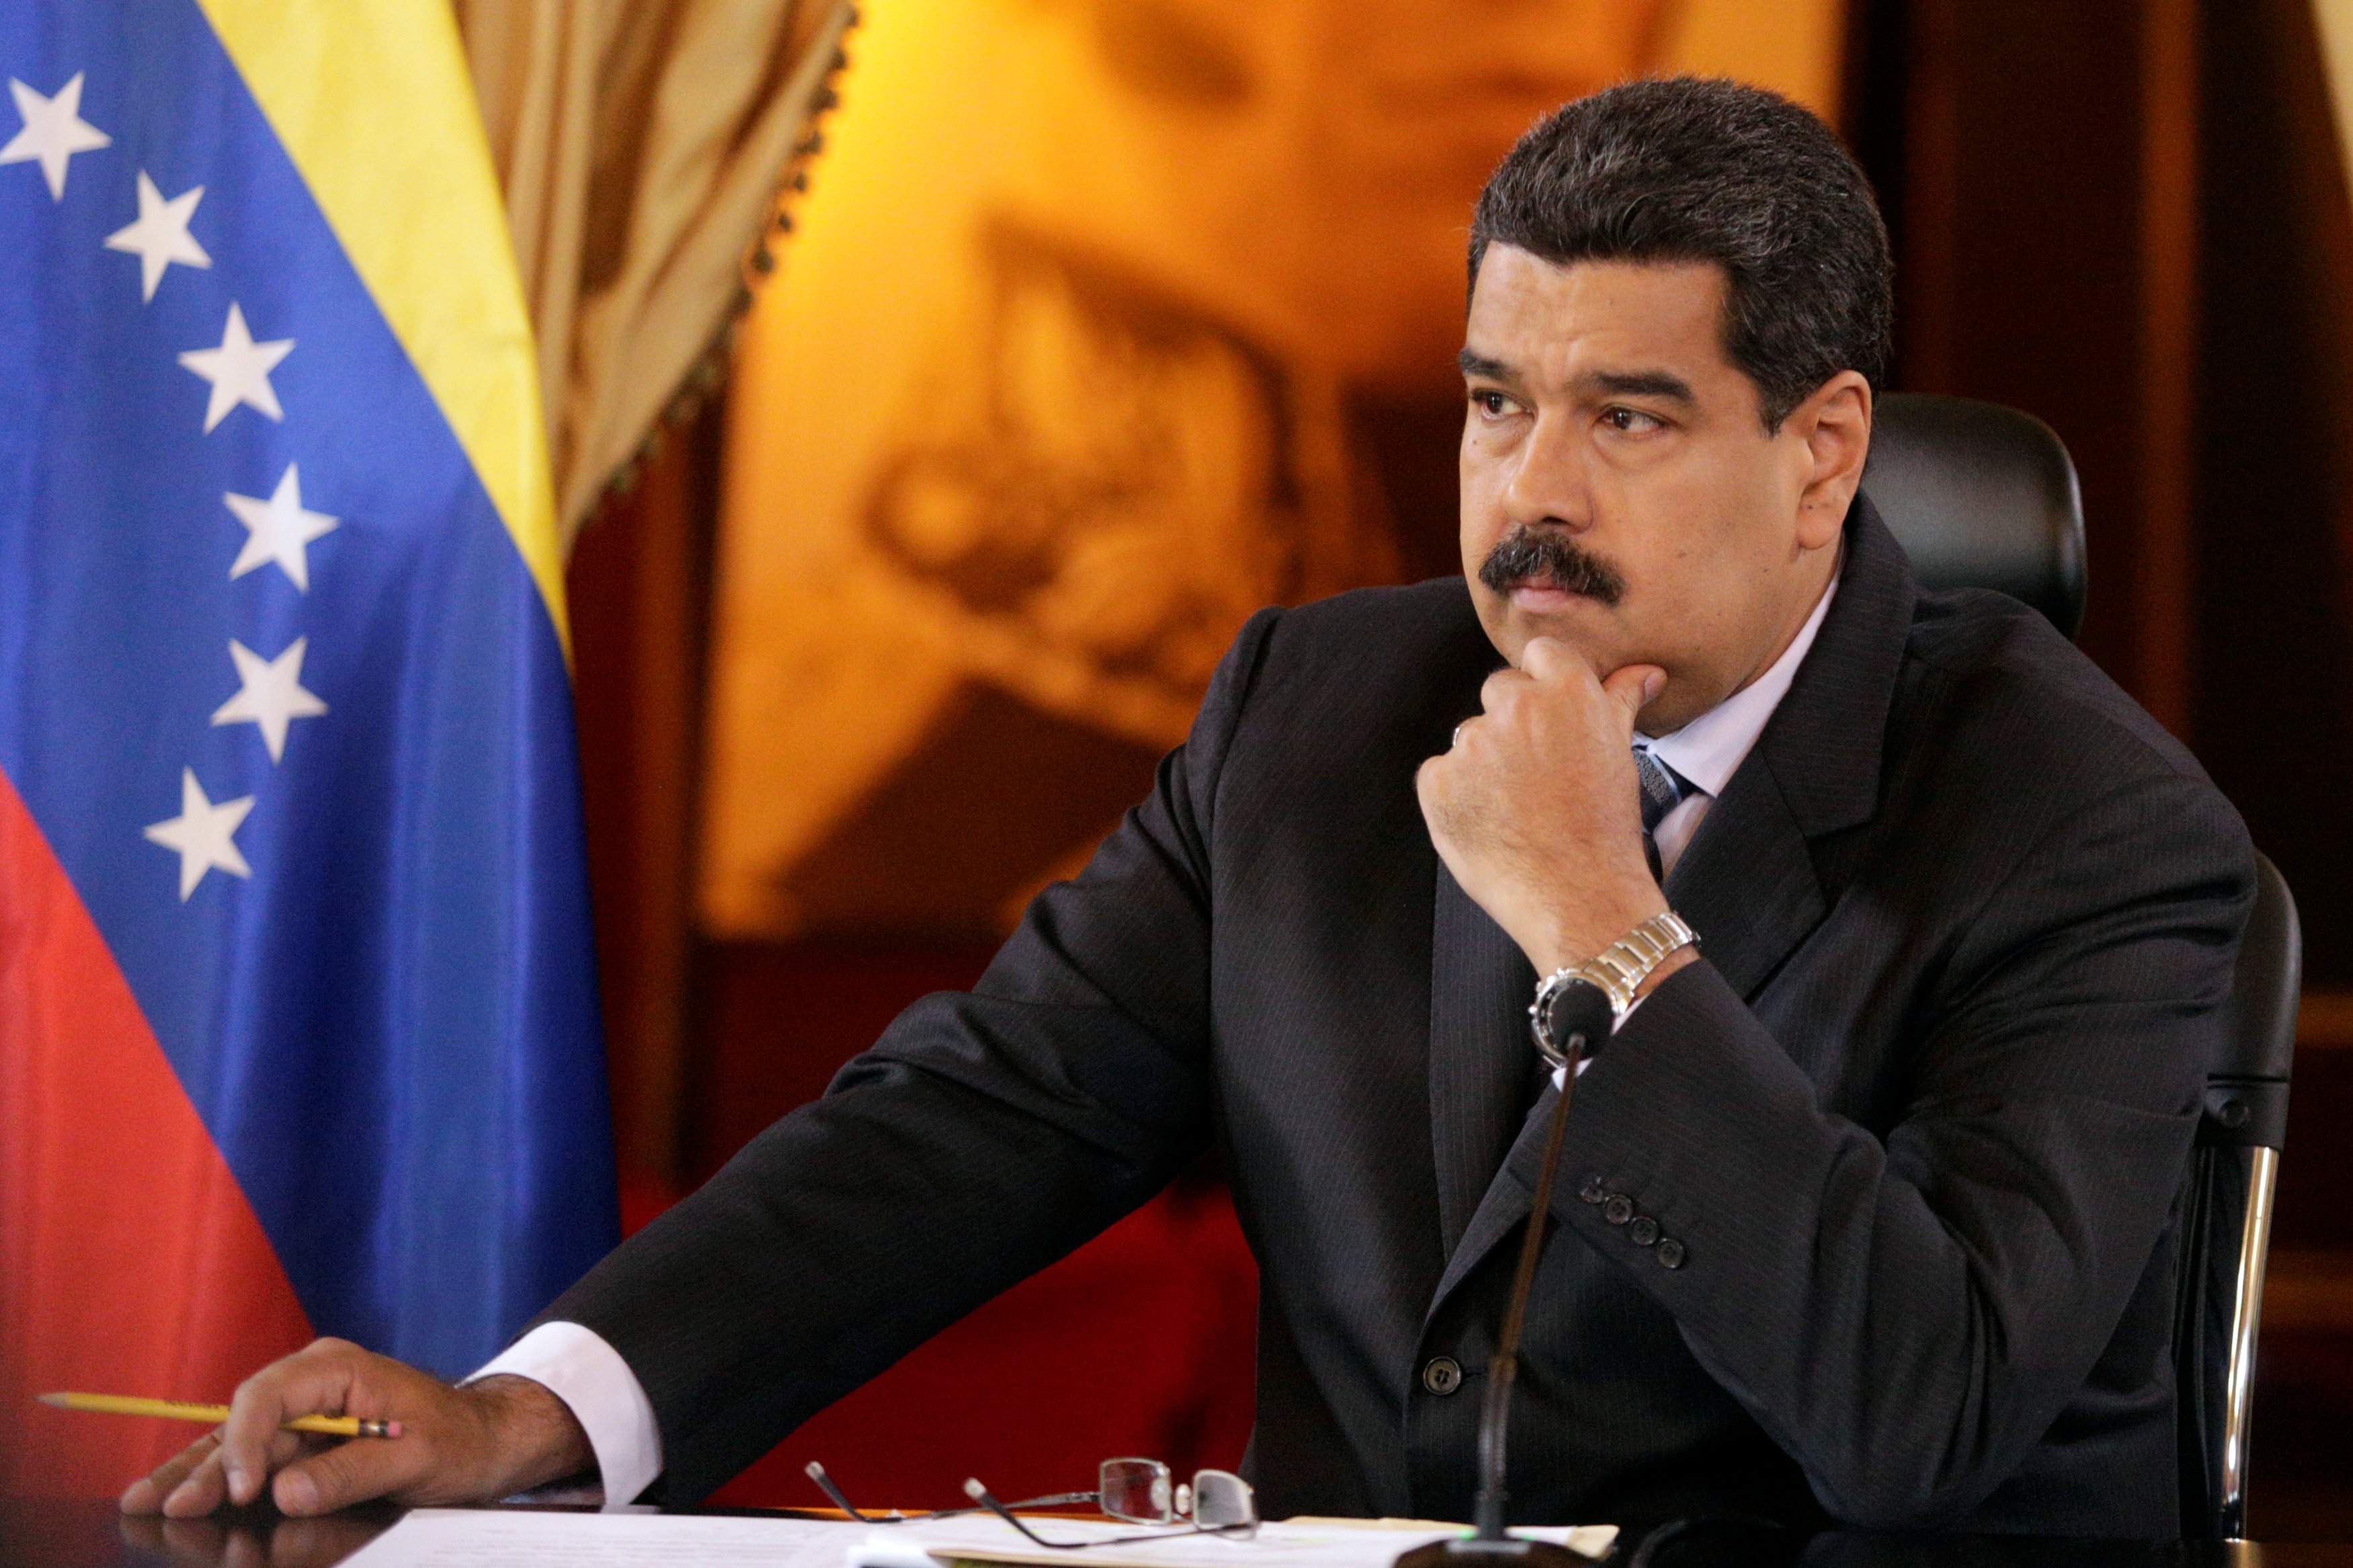 Мадуро. Николас Мадуро. Президентвенесуэллы Мадура. Президент Венесуэлы Мадуро. Николас Мадуро фото.